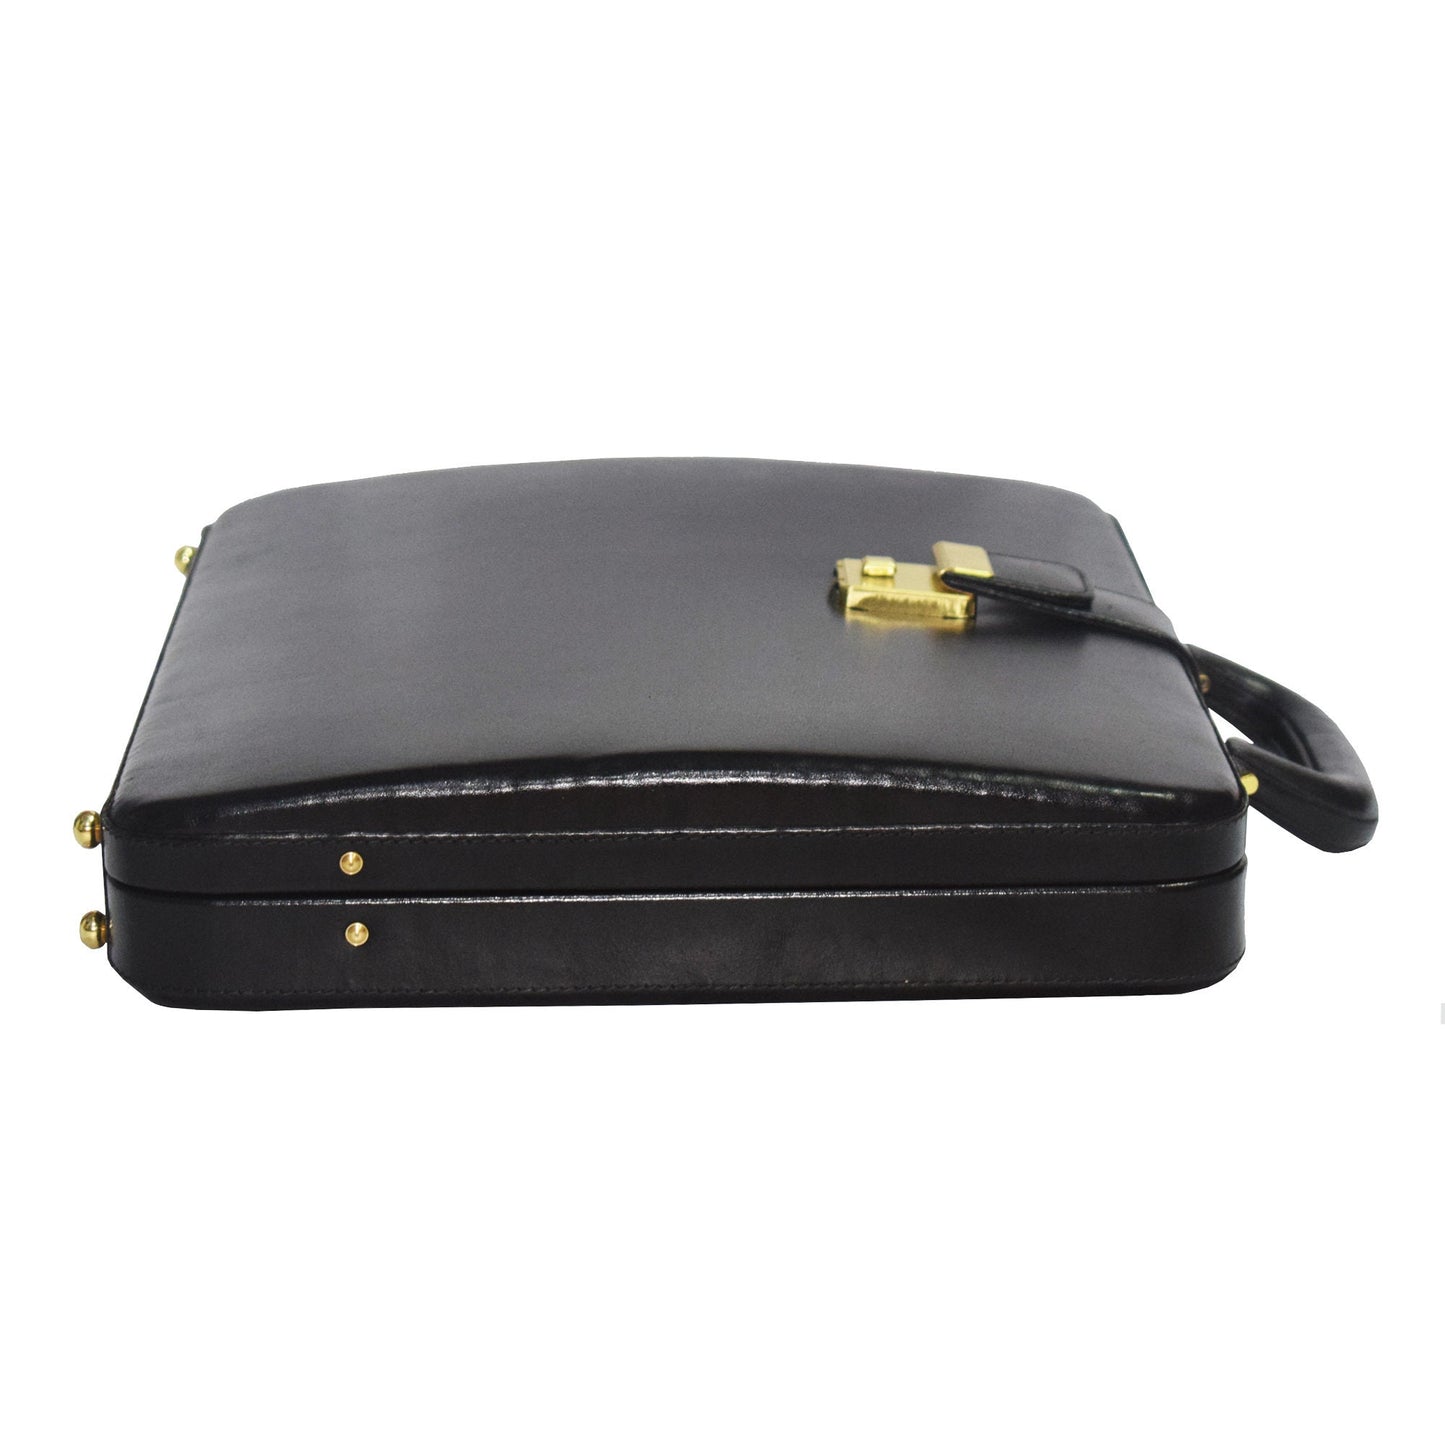 Genuine Leather Attache Briefcase for Men's Office Handbag Doctor Briefcase Leather Laptop MacBook Carry Case (Black)